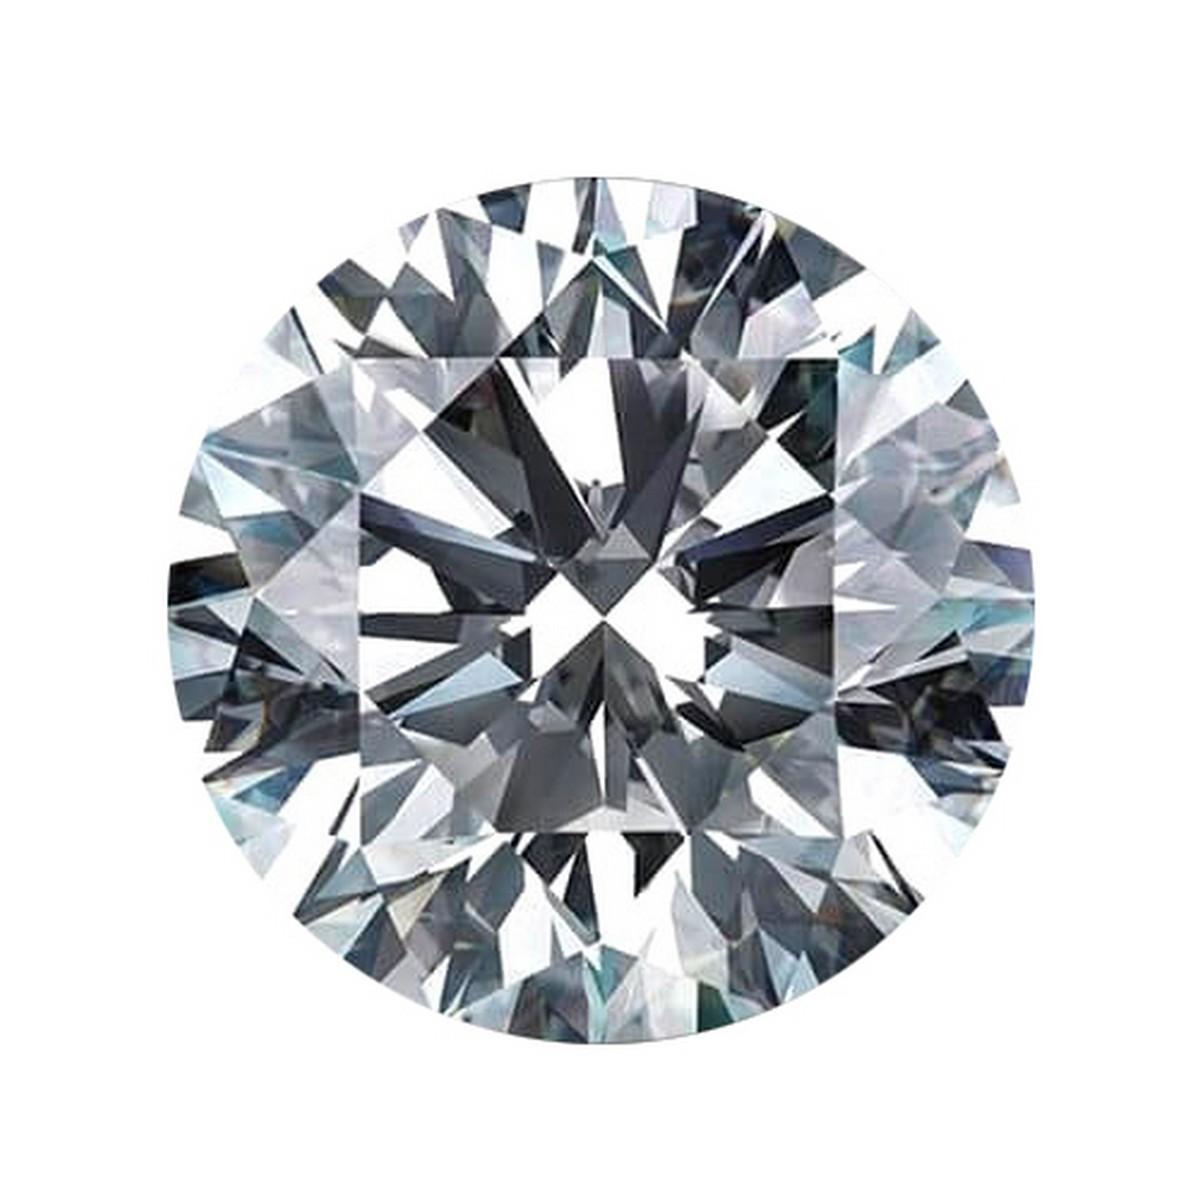 1.21 ctw. VVS2 IGI Certified Round Brilliant Cut Loose Diamond (LAB GROWN)